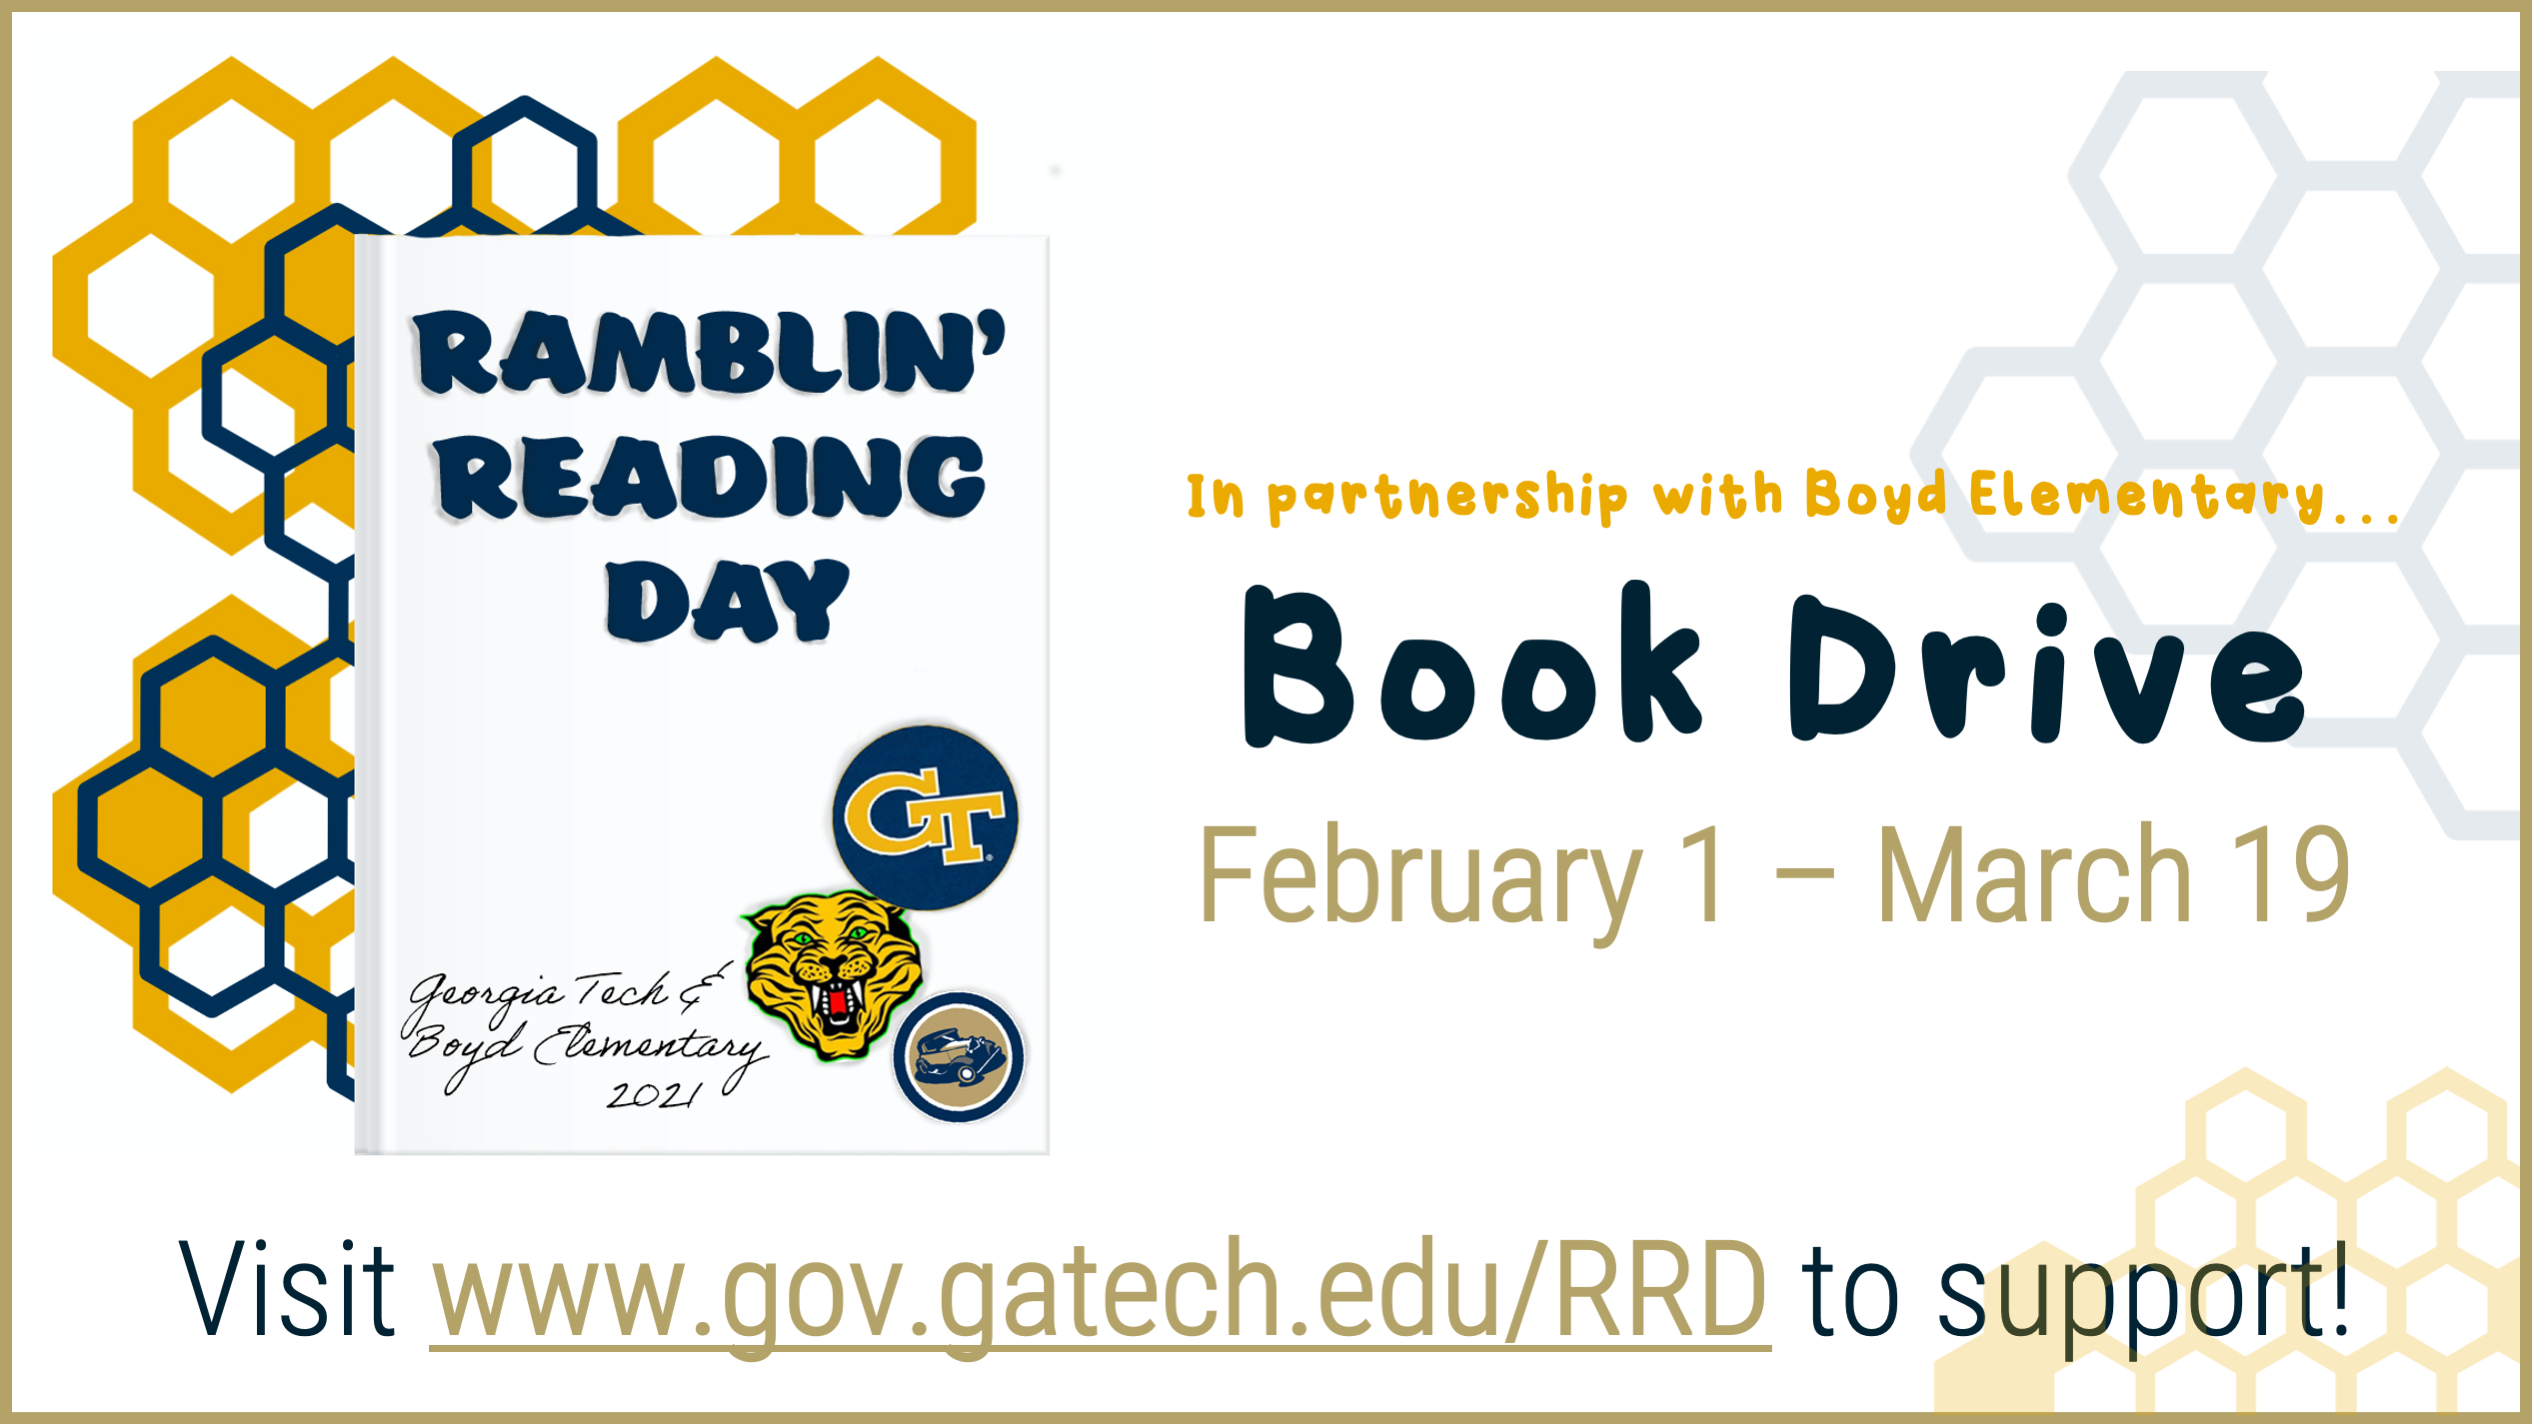 The Ramblin' Reading Day book drive runs through March 19, 2021.